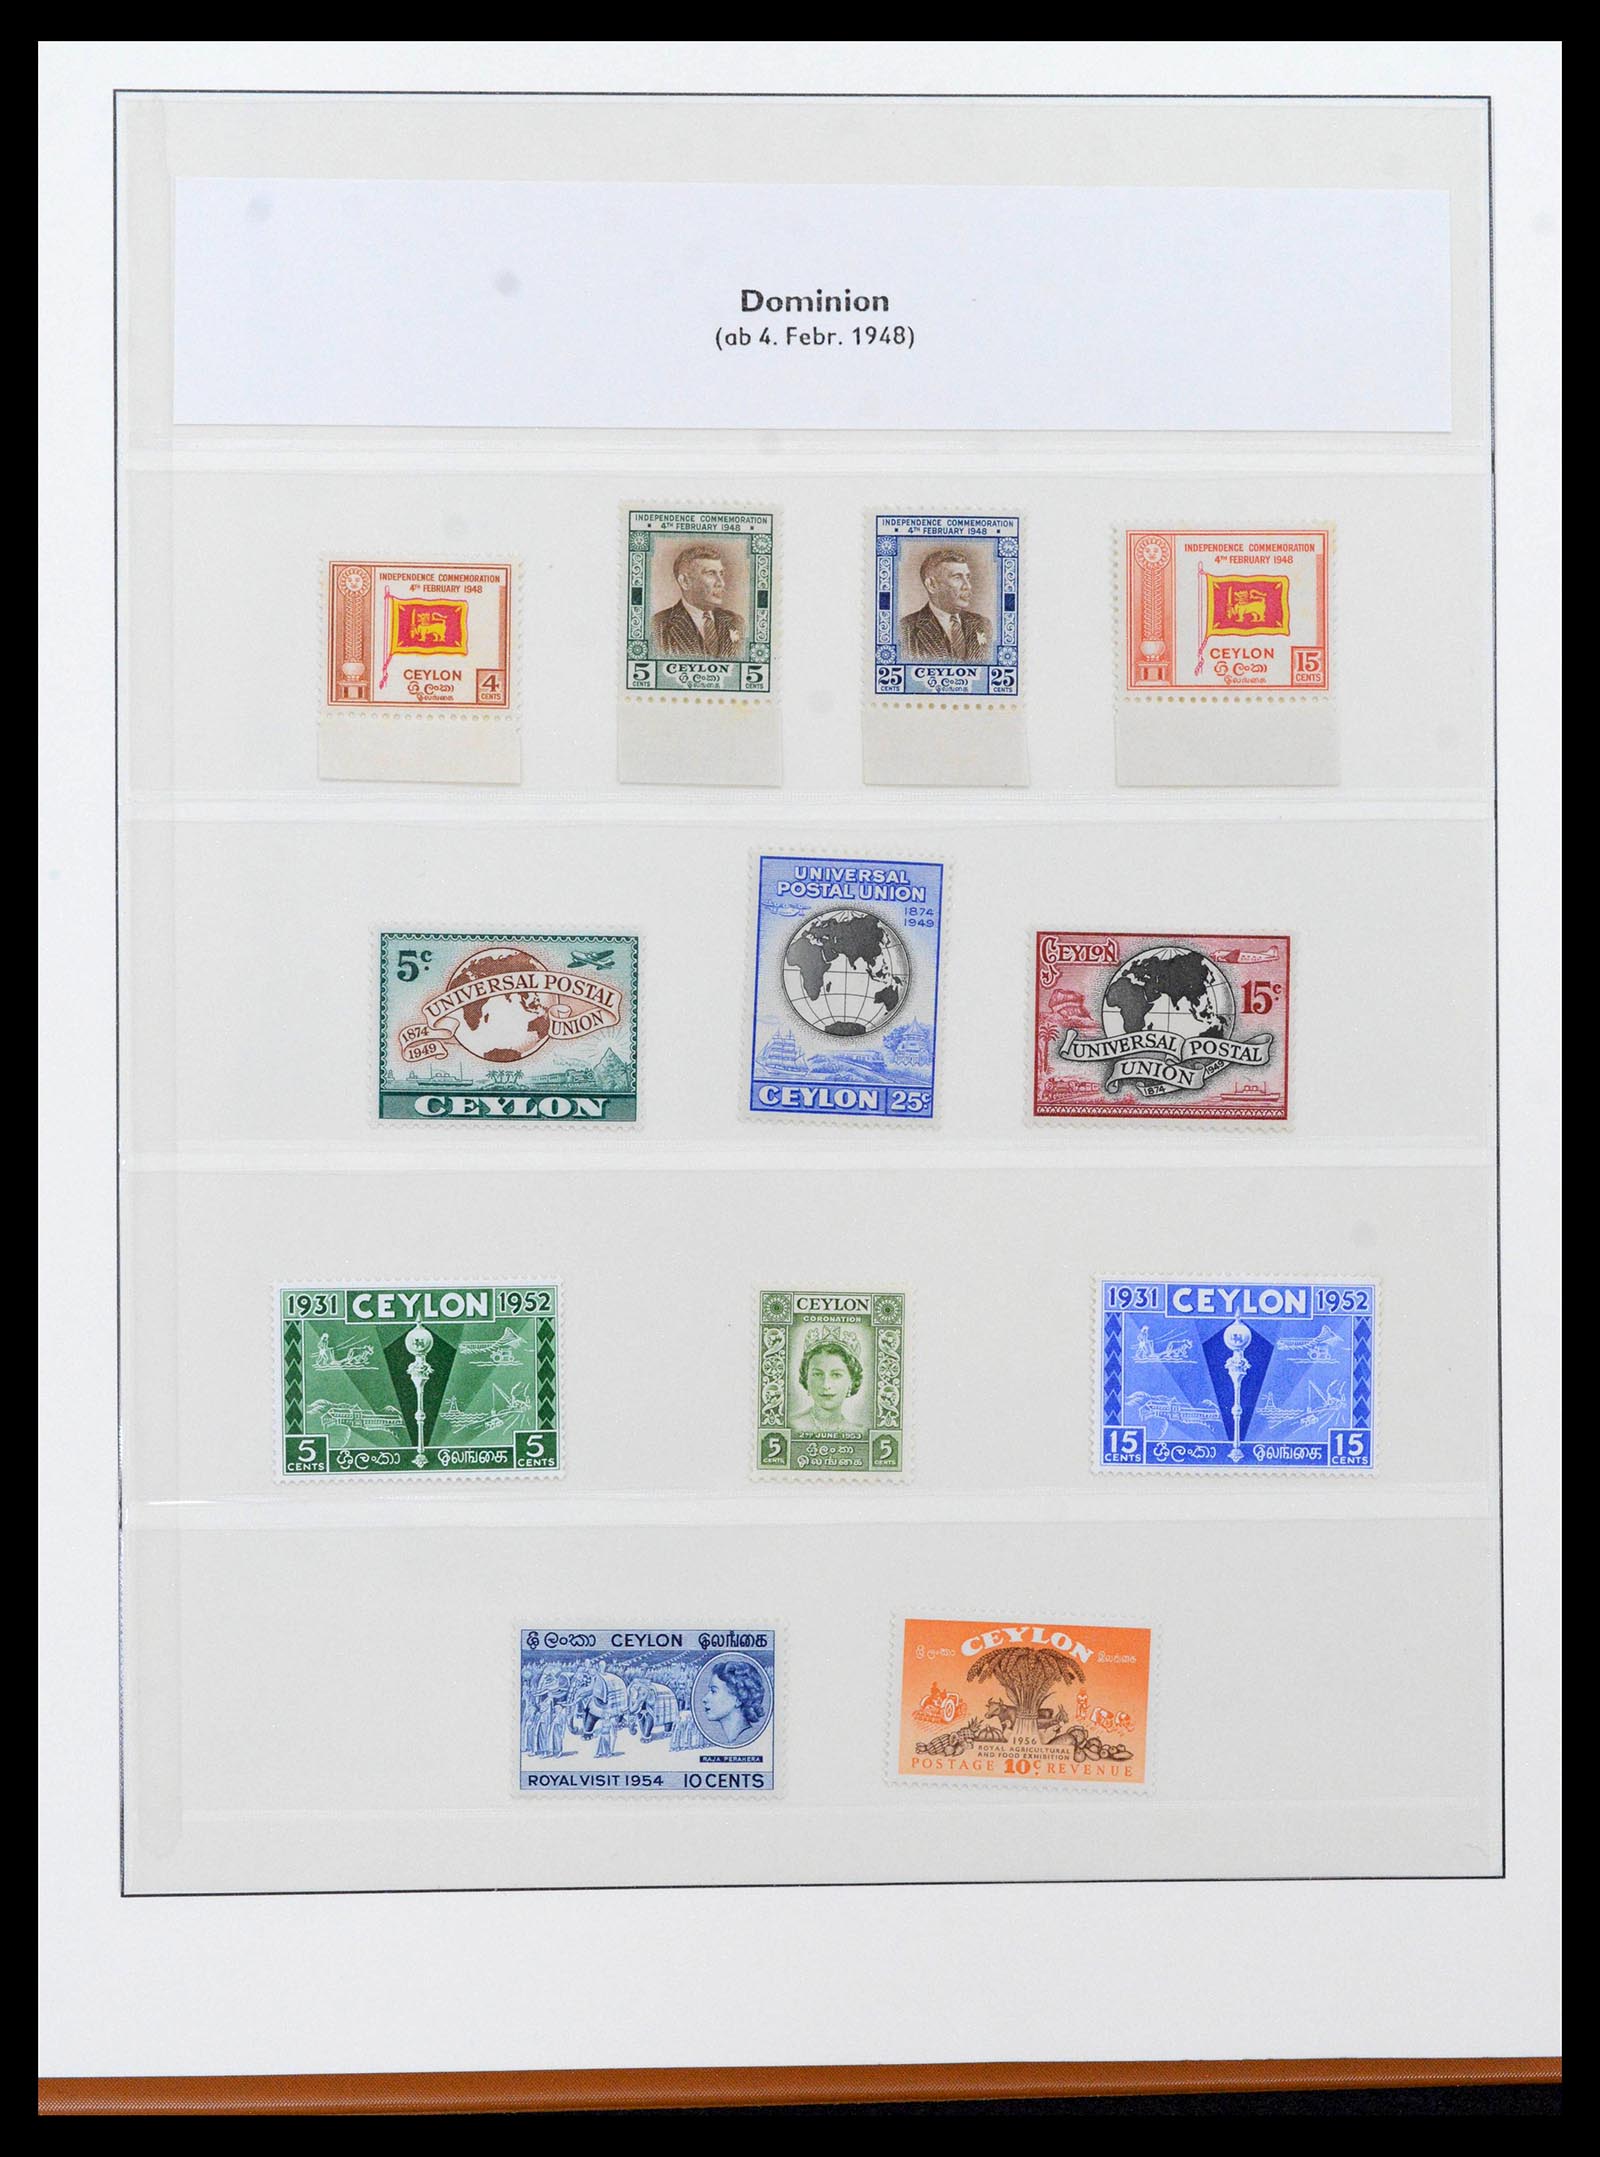 39003 0020 - Stamp collection 39003 Ceylon/Sri Lanka 1857-2003.